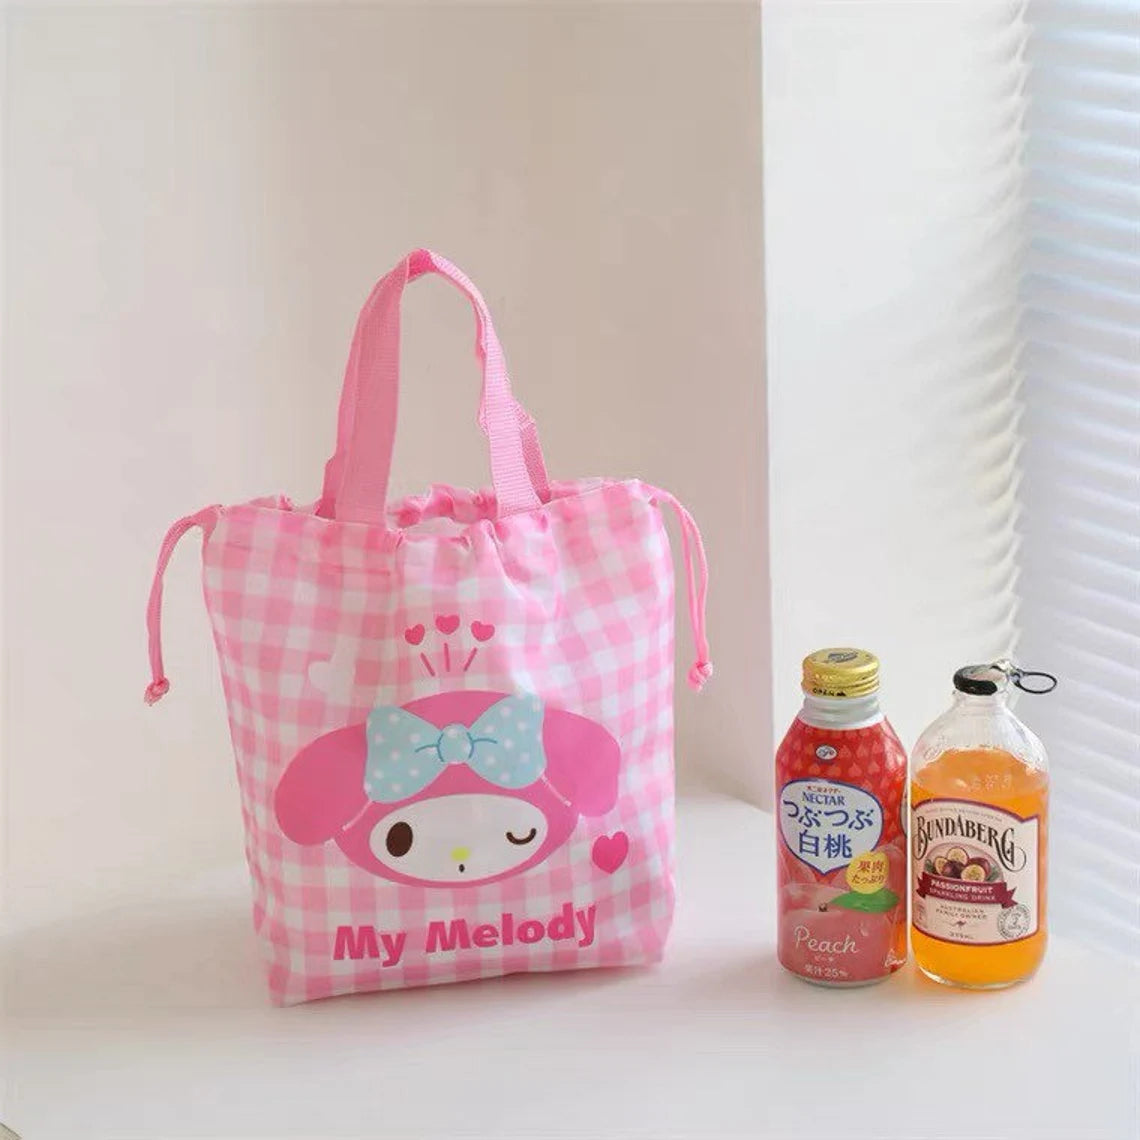 My Melody Kuromi Lunch Bag